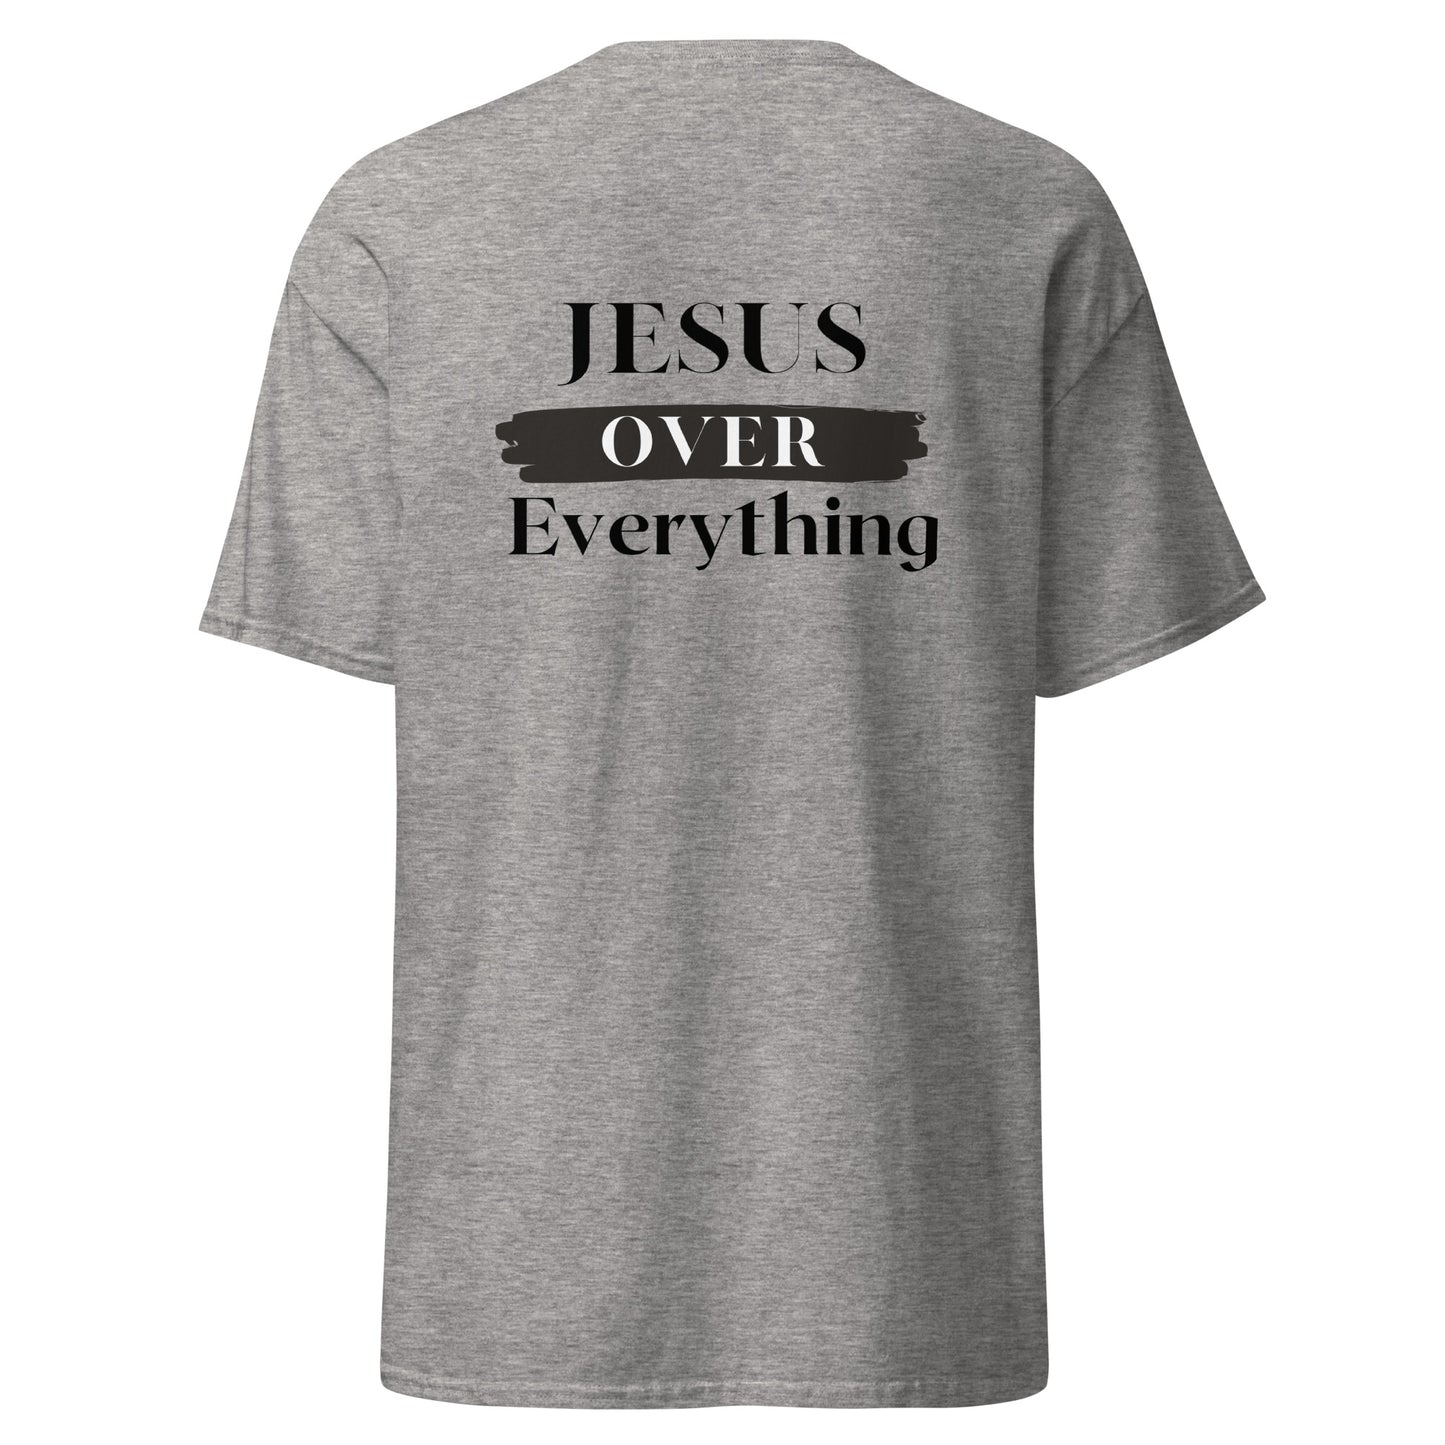 Jesus over everything